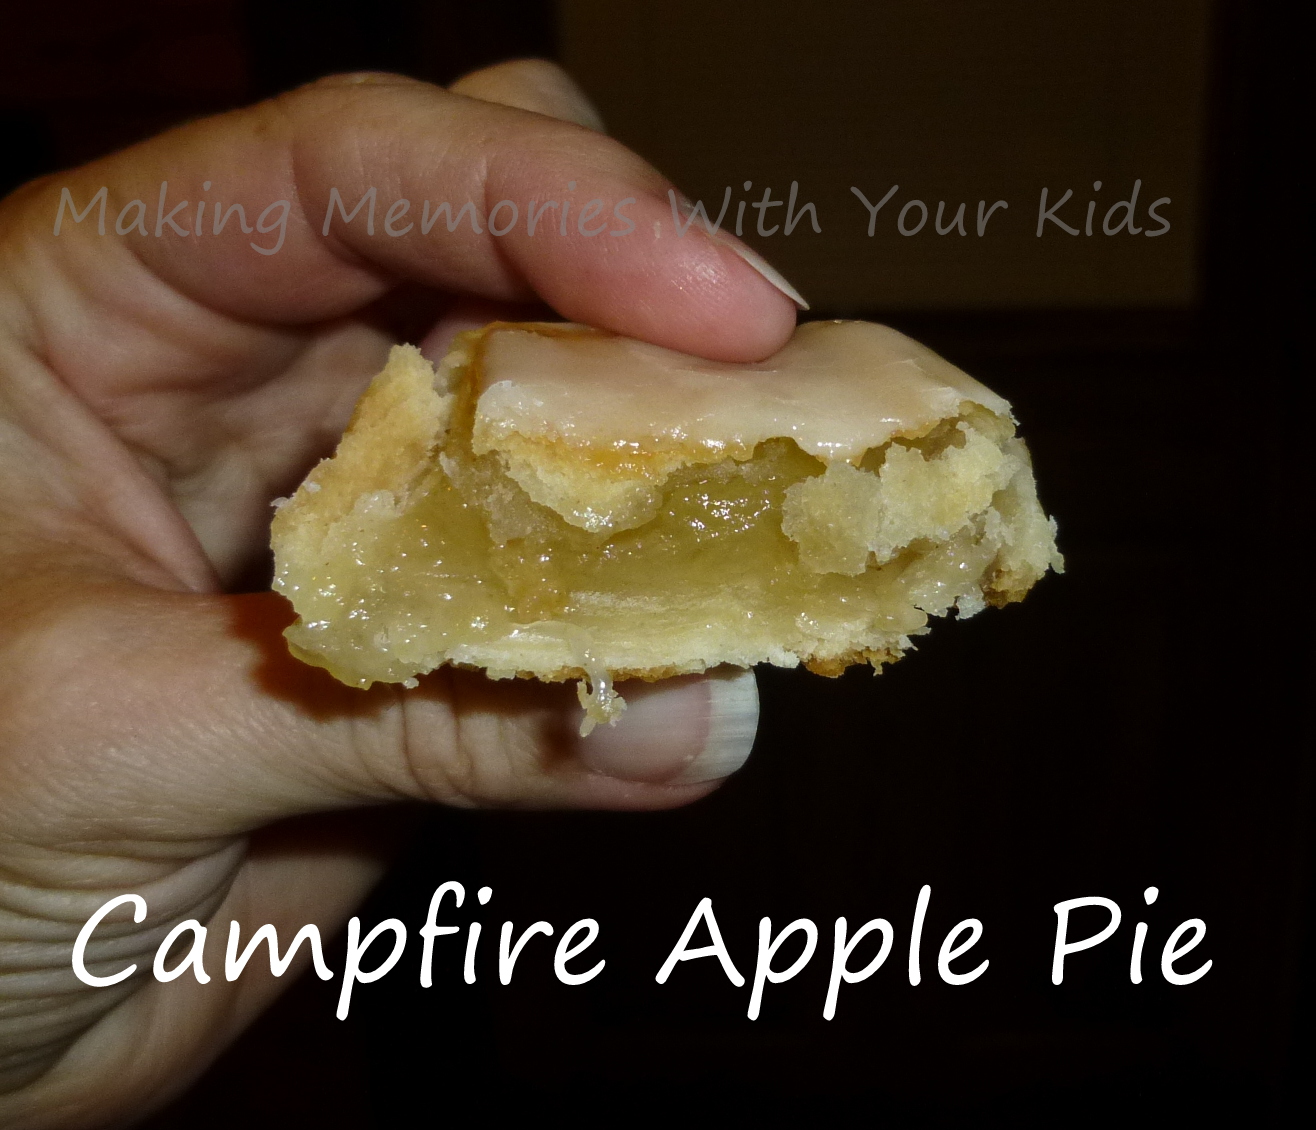 http://makingmemorieswithyourkids.com/wp-content/uploads/2013/07/campfire-apple-pie-003.jpg